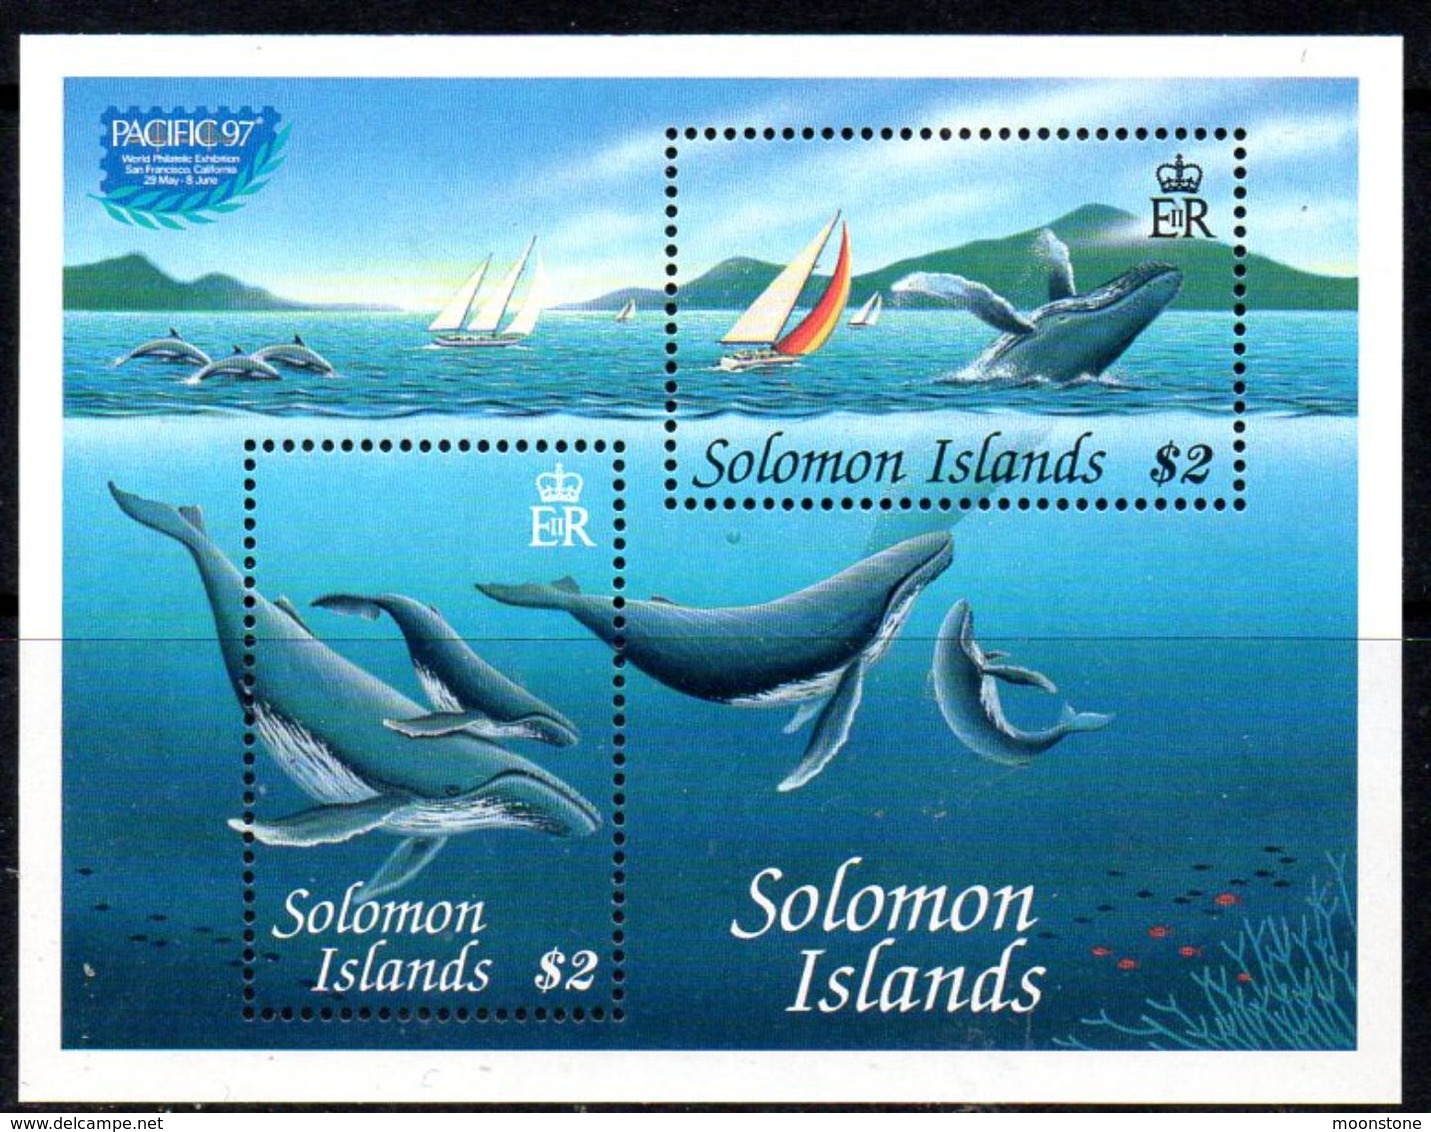 Solomon Islands 1997 Pacific '97 Whales MS, MNH, SG 888 (B) - Solomon Islands (1978-...)